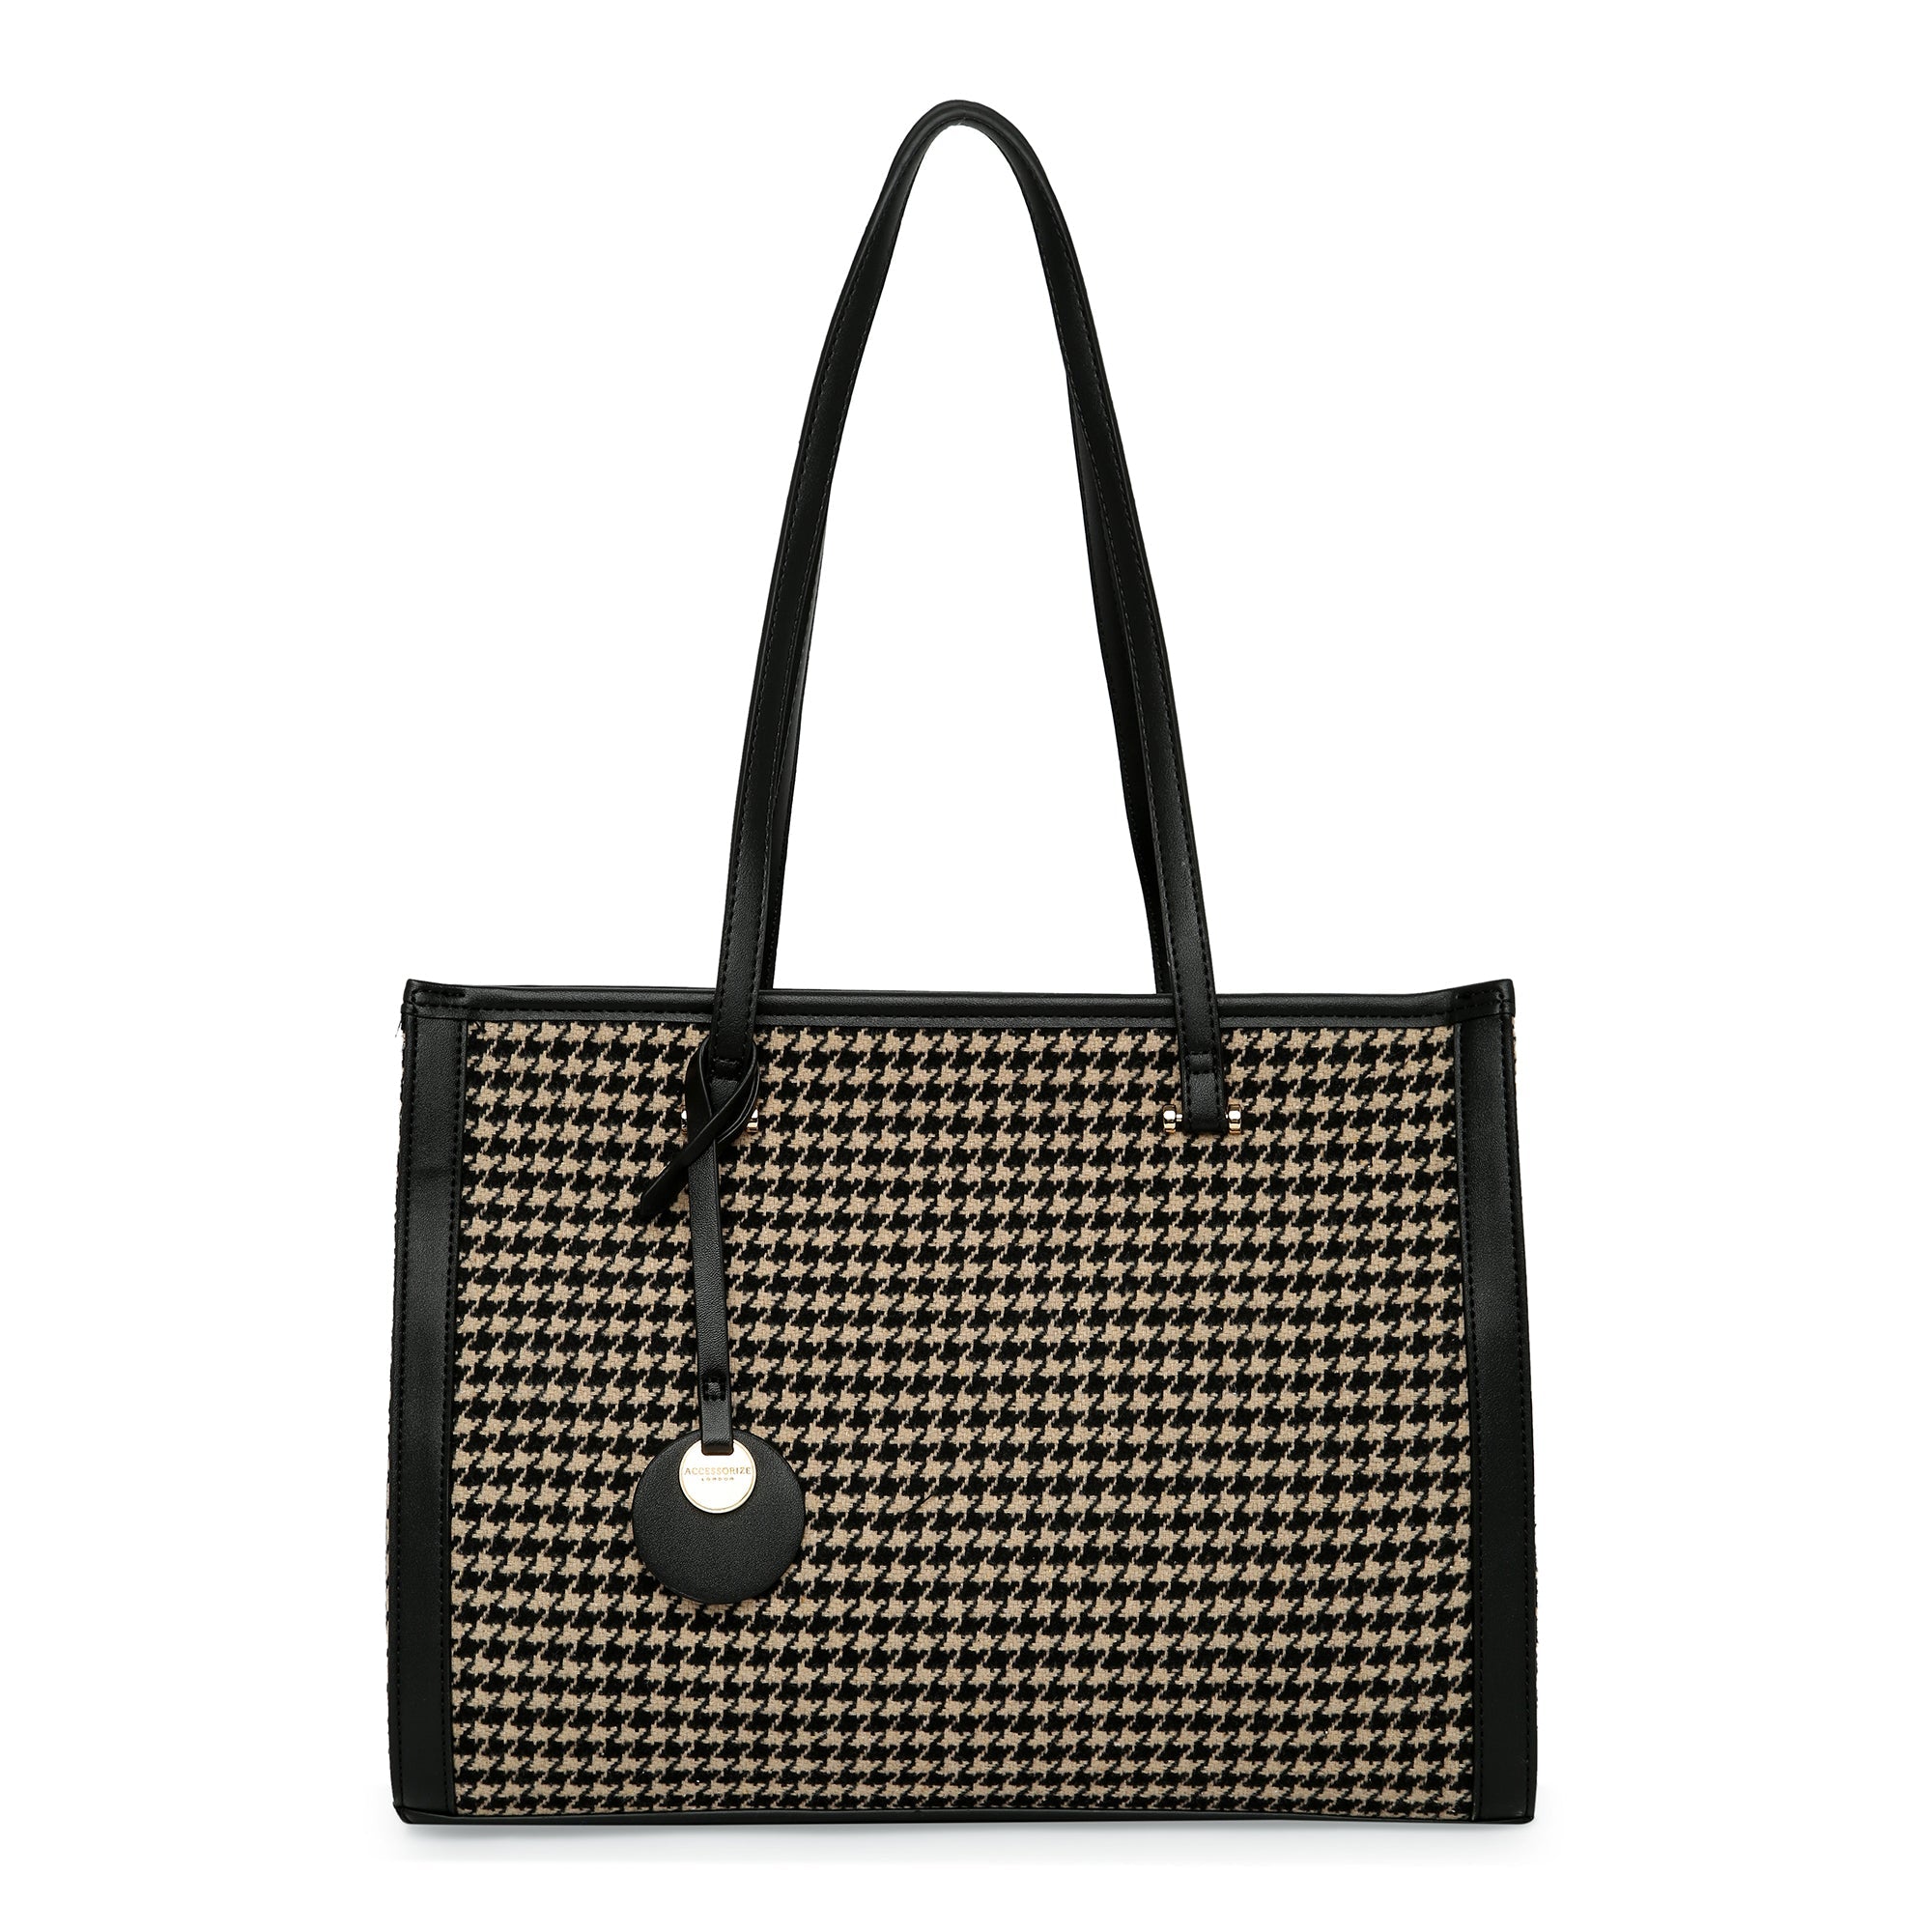 Buy Shopper Bags for Women